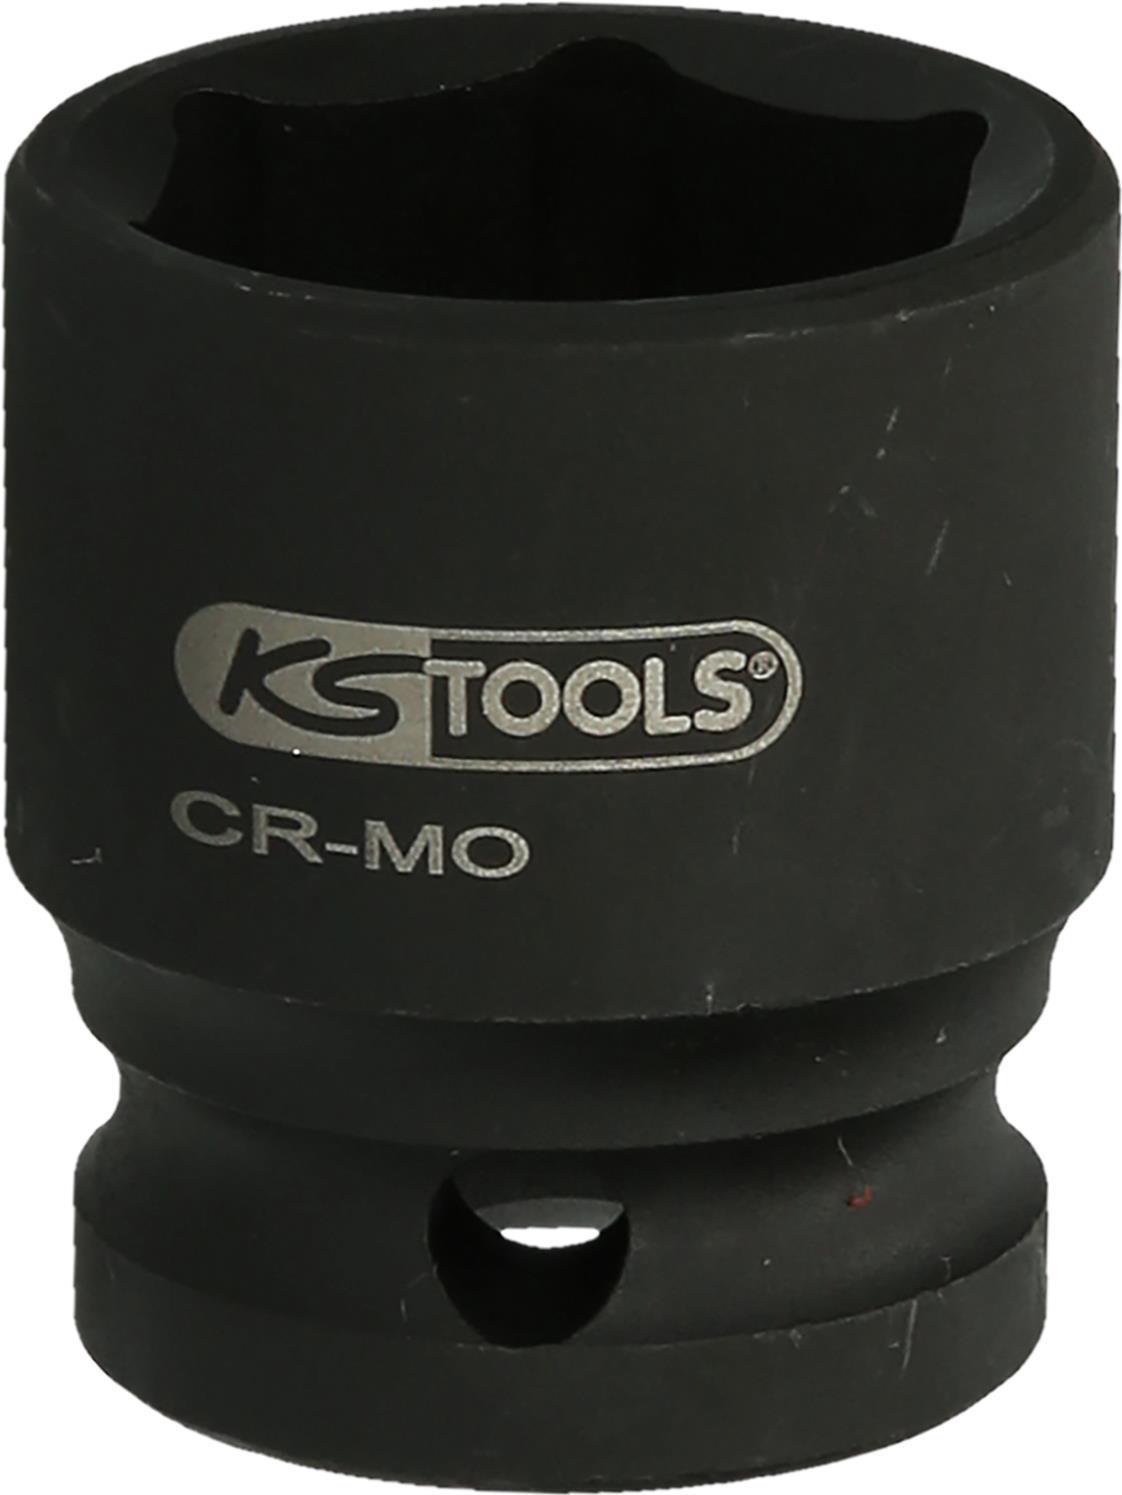 KS TOOLS Werkzeuge-Maschinen GmbH 2.1/2 Sechskant-Kraft-Stecknuss, 140 mm (515.2199) von KS TOOLS